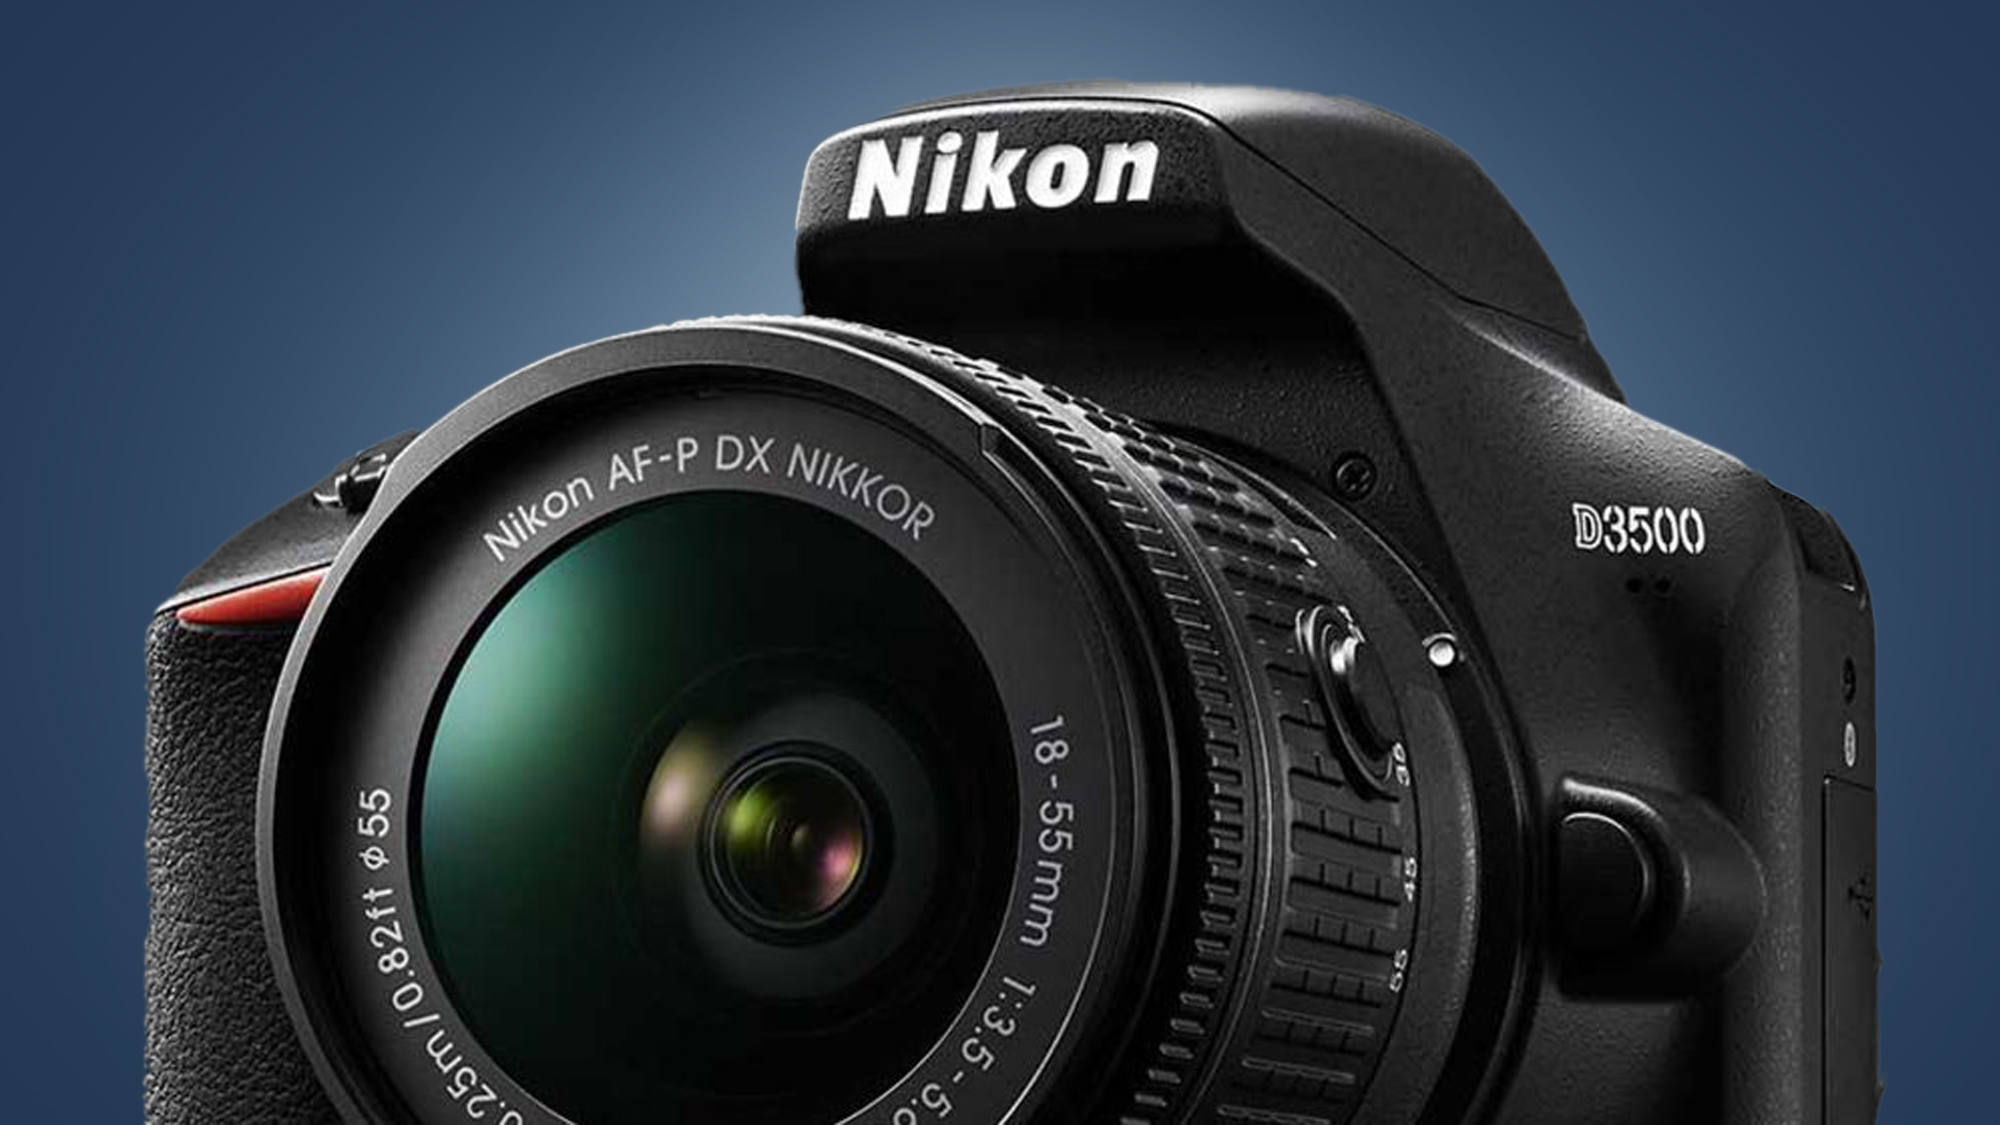 The Nikon D3500 DSLR on a blue background